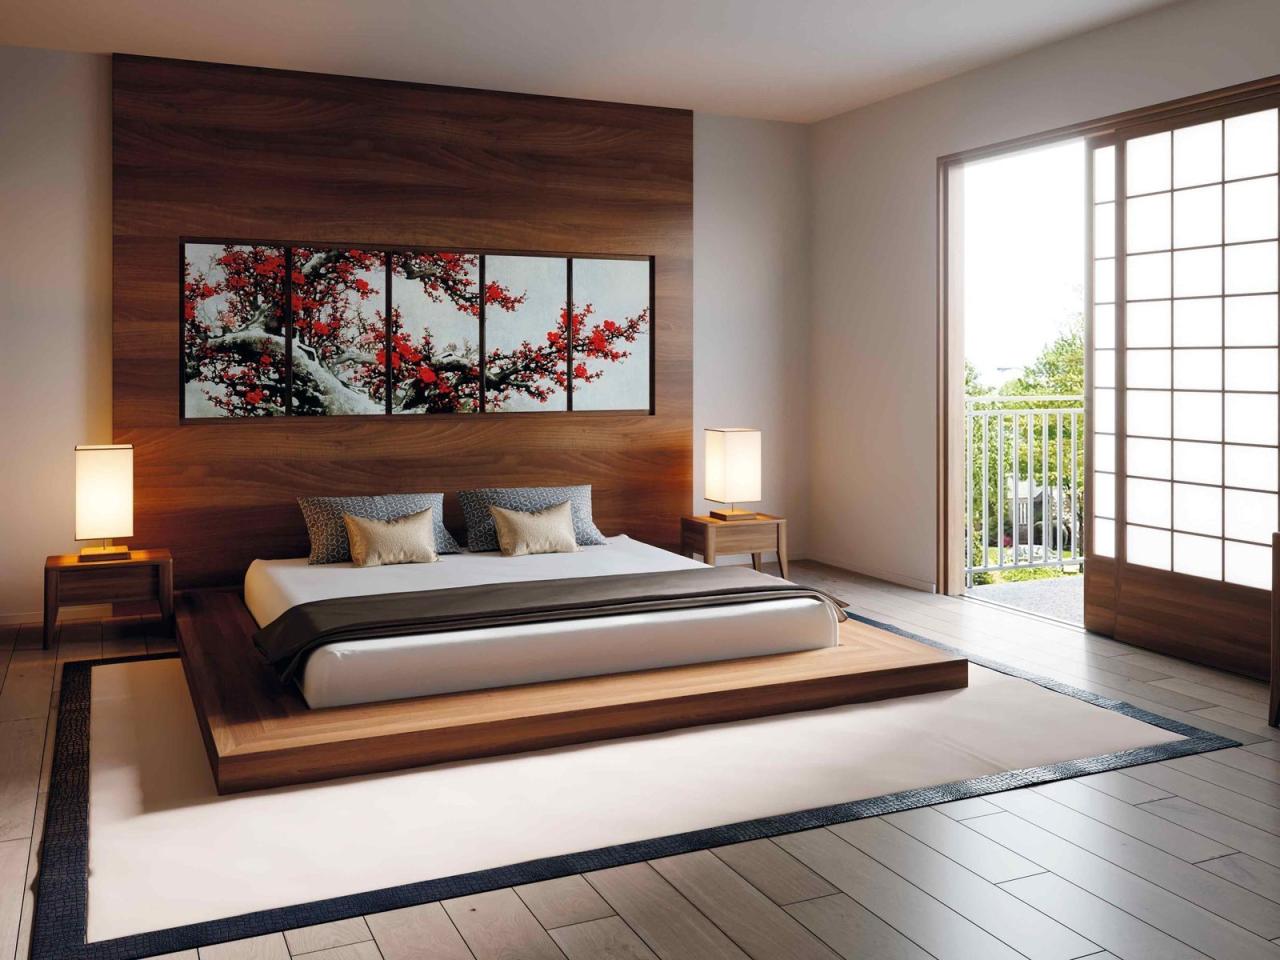 Bedroom modern japanese style beautiful interior luxury most zen mock designing rendering peaceful 3d bedrooms house decoration decor าน อง